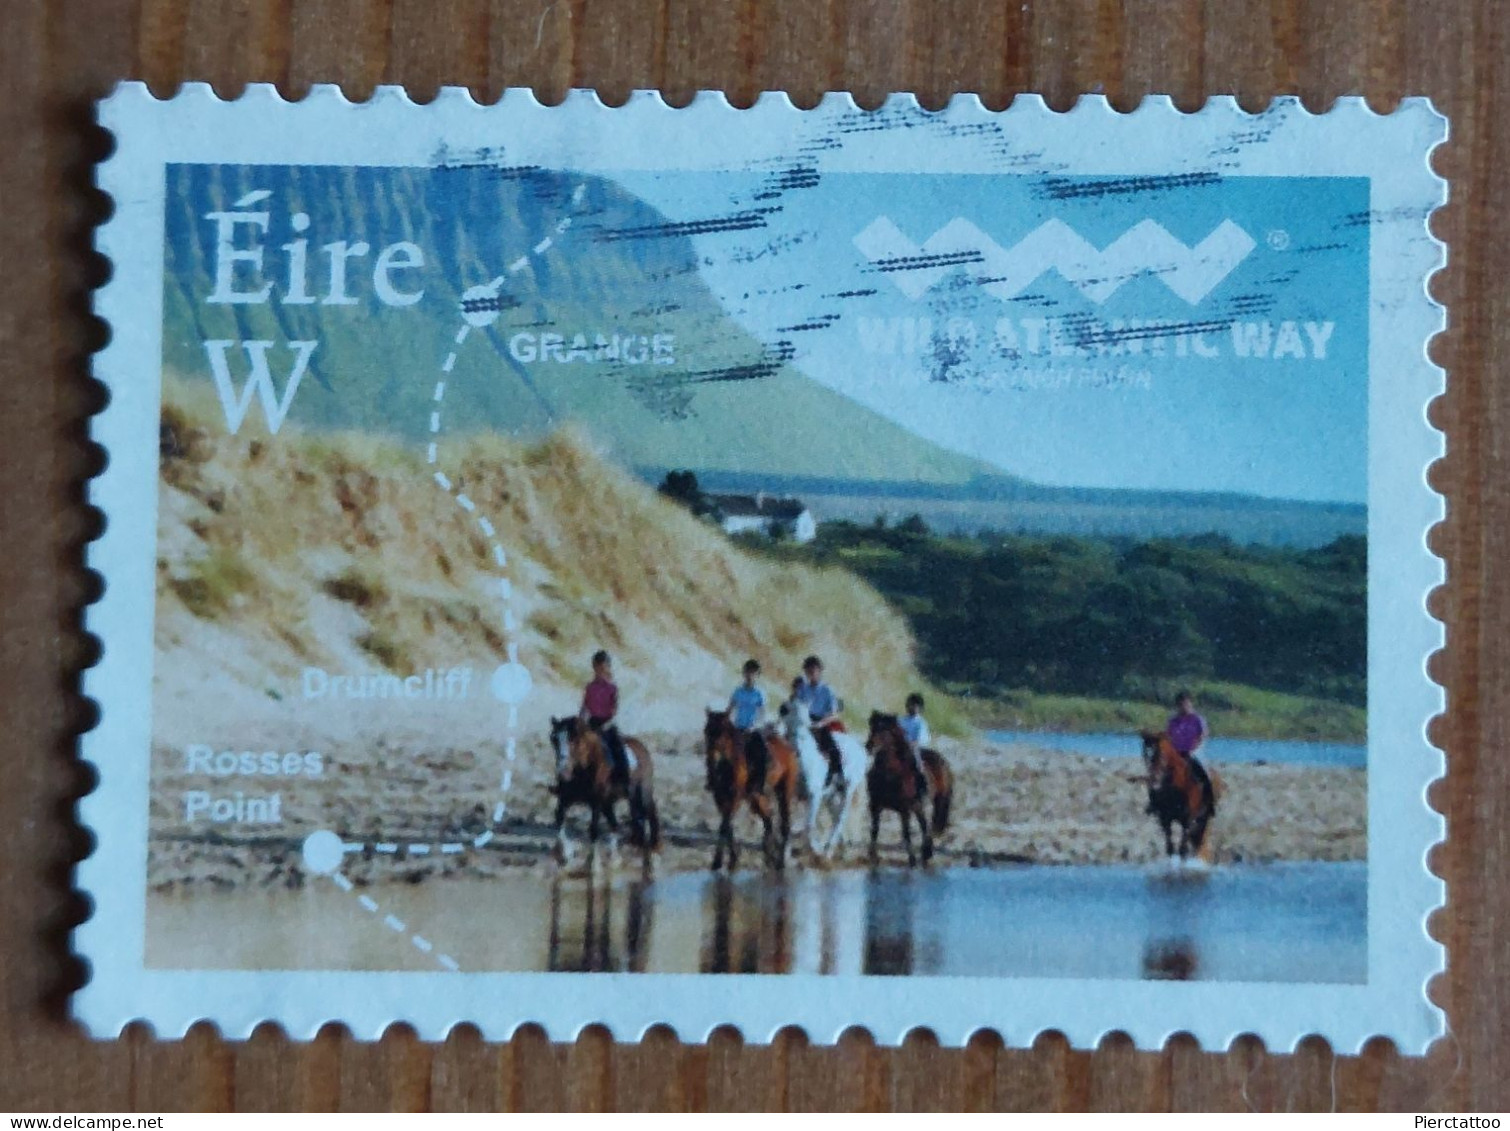 Wild Atlantic Way (Chevaux/Cavaliers) - Irlande - 2018 - YT???? - Used Stamps